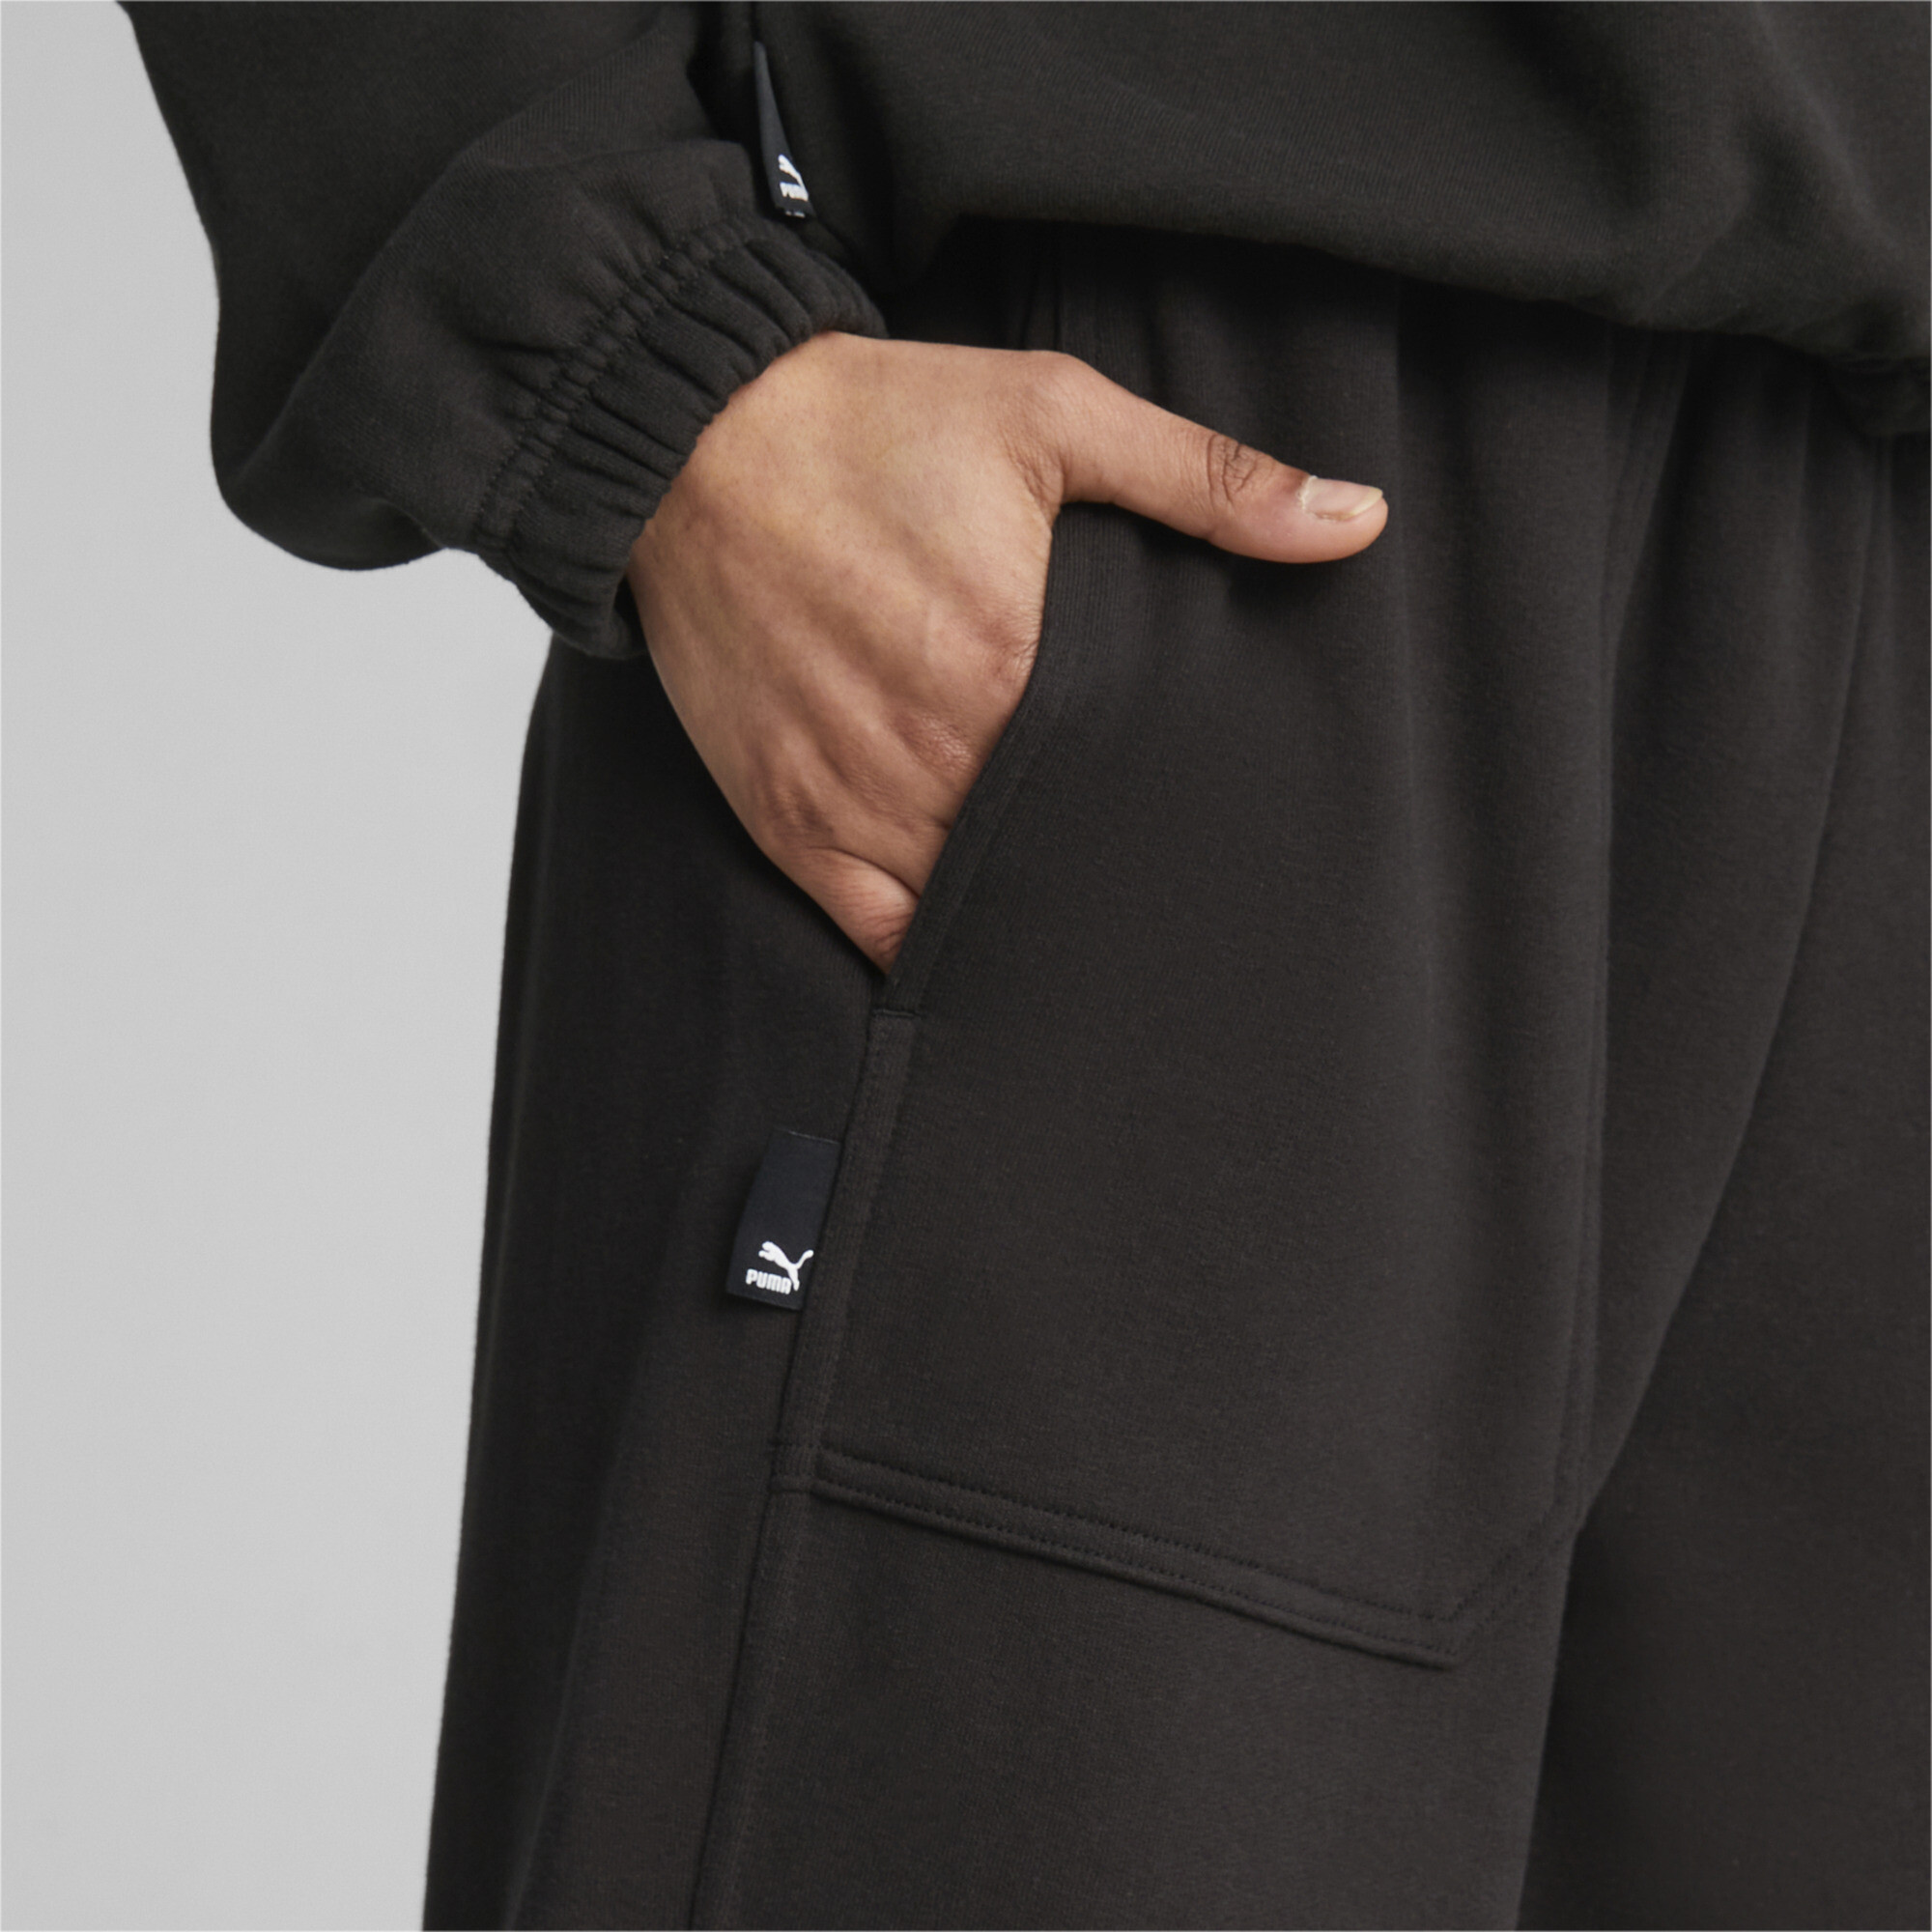 Women's PUMA DOWNTOWN Sweatpants In Black, Size XS